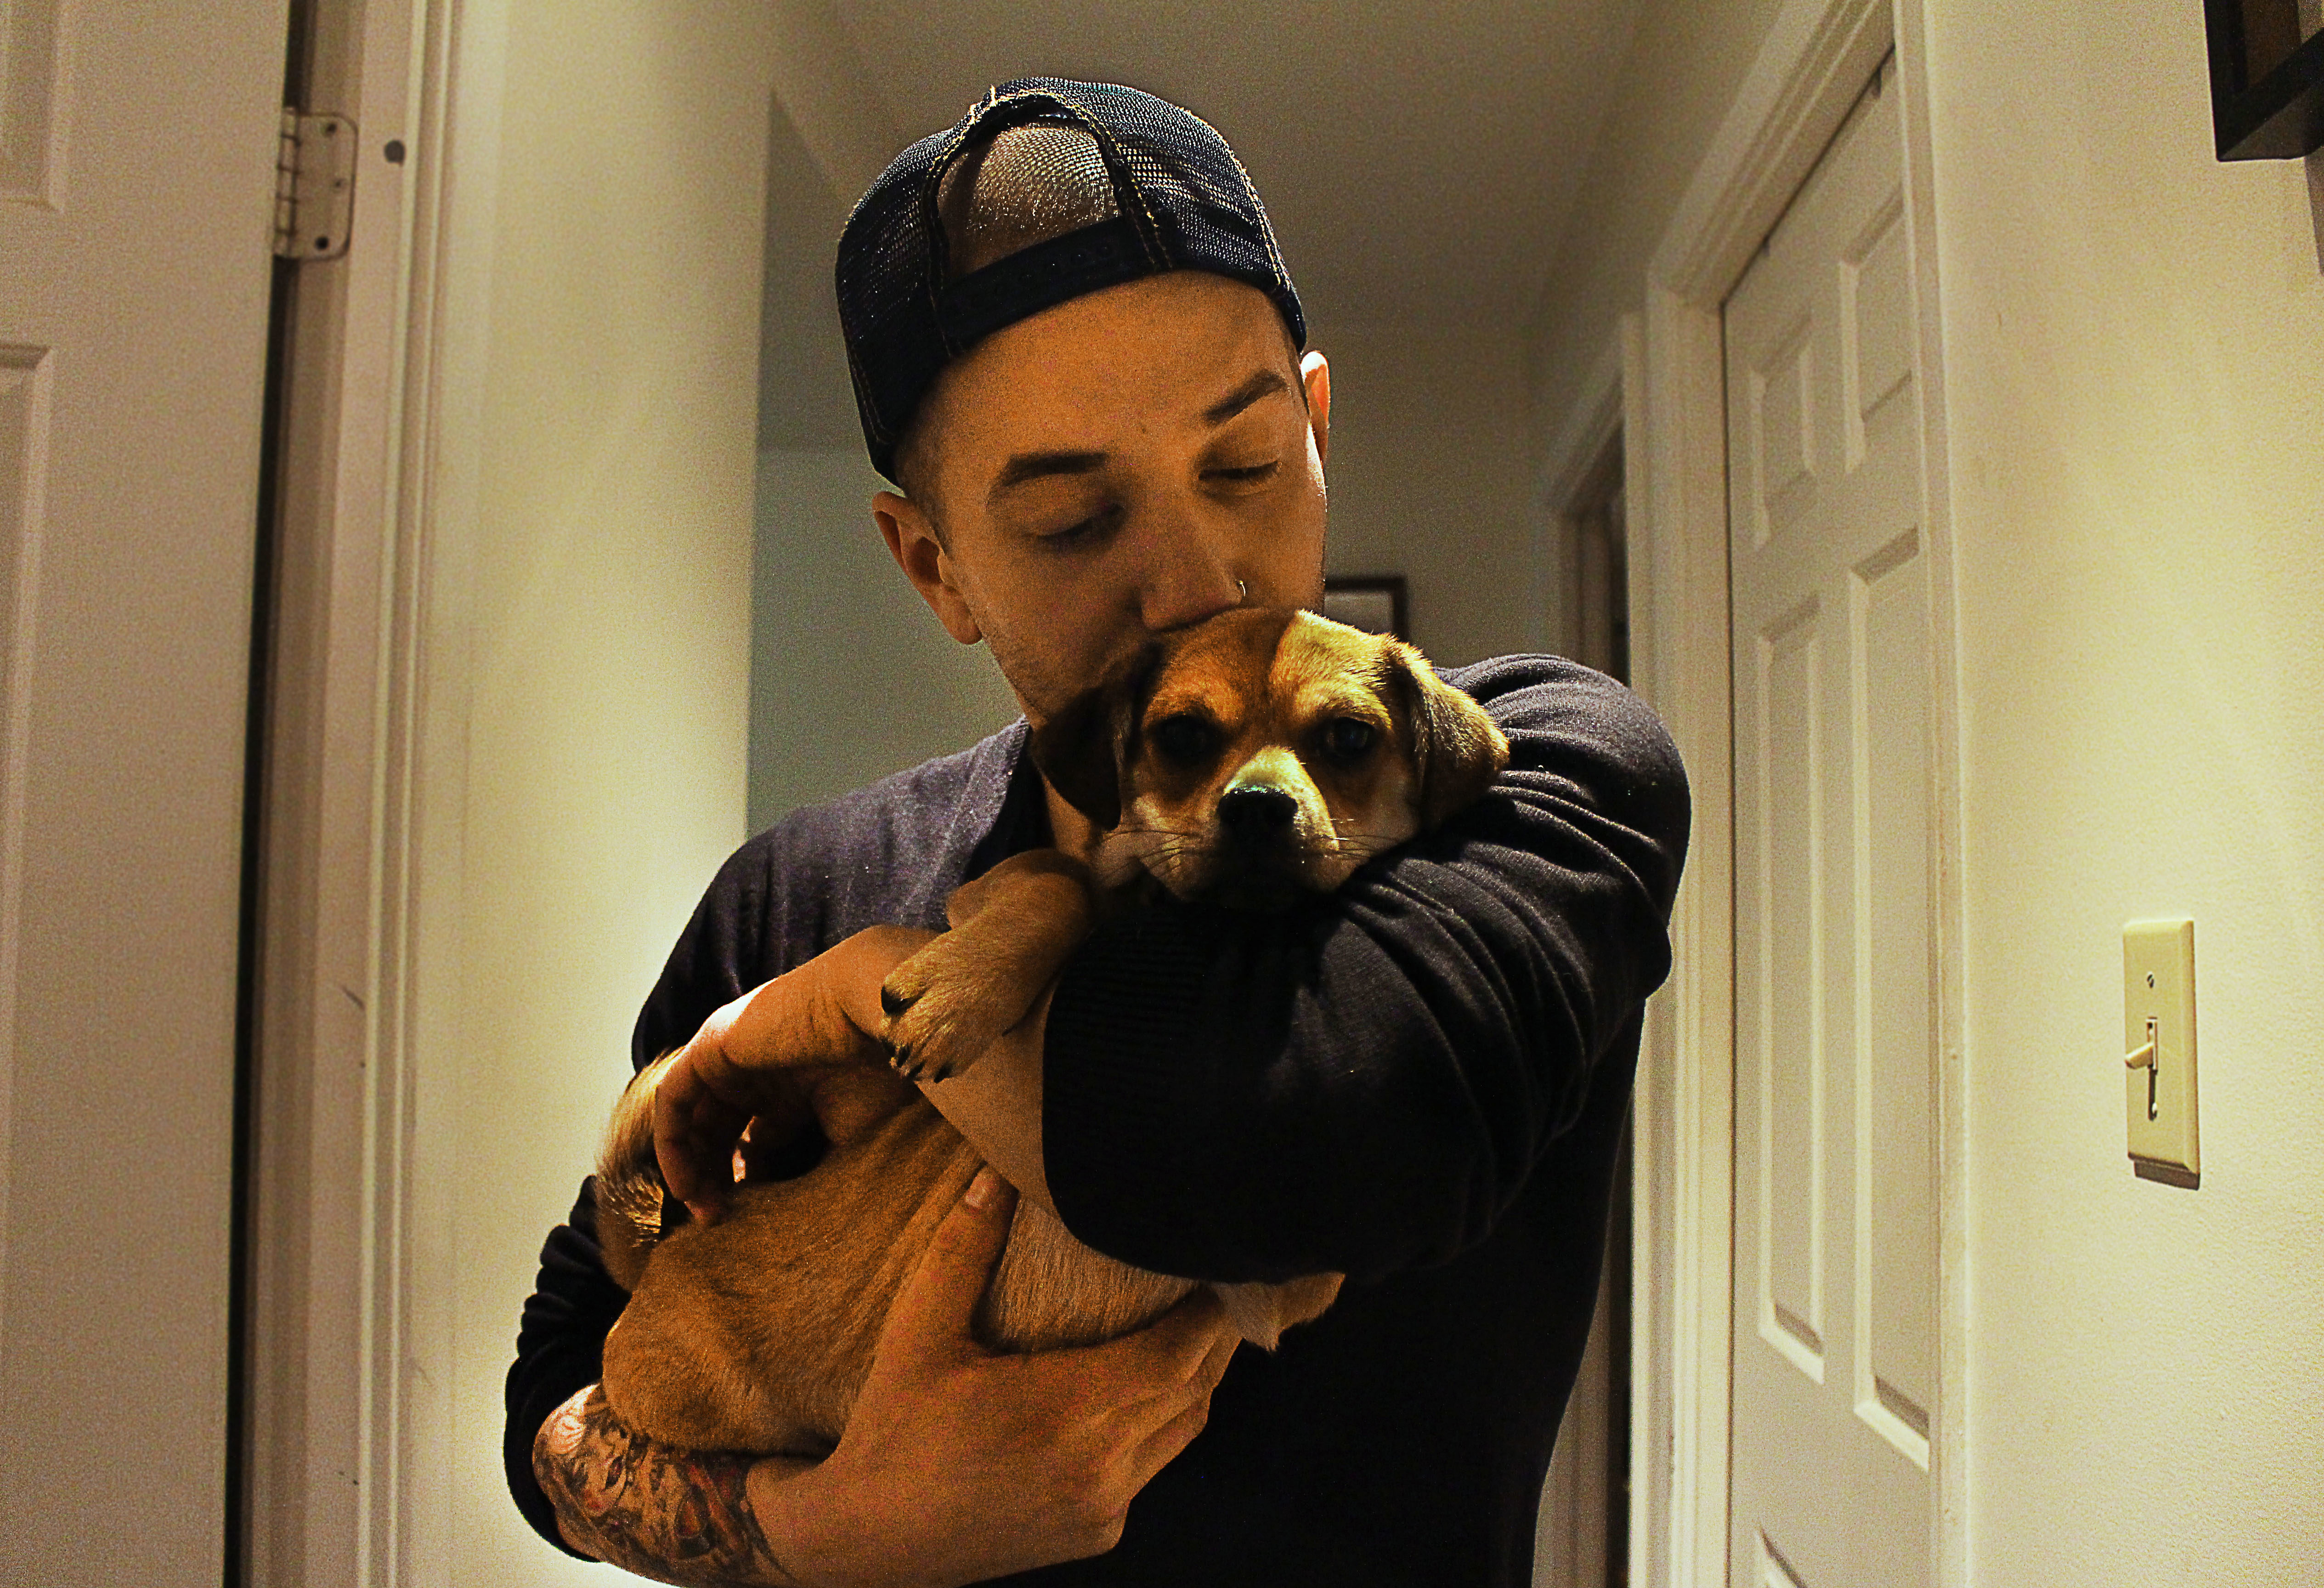 Matty Cameron holding a dog.